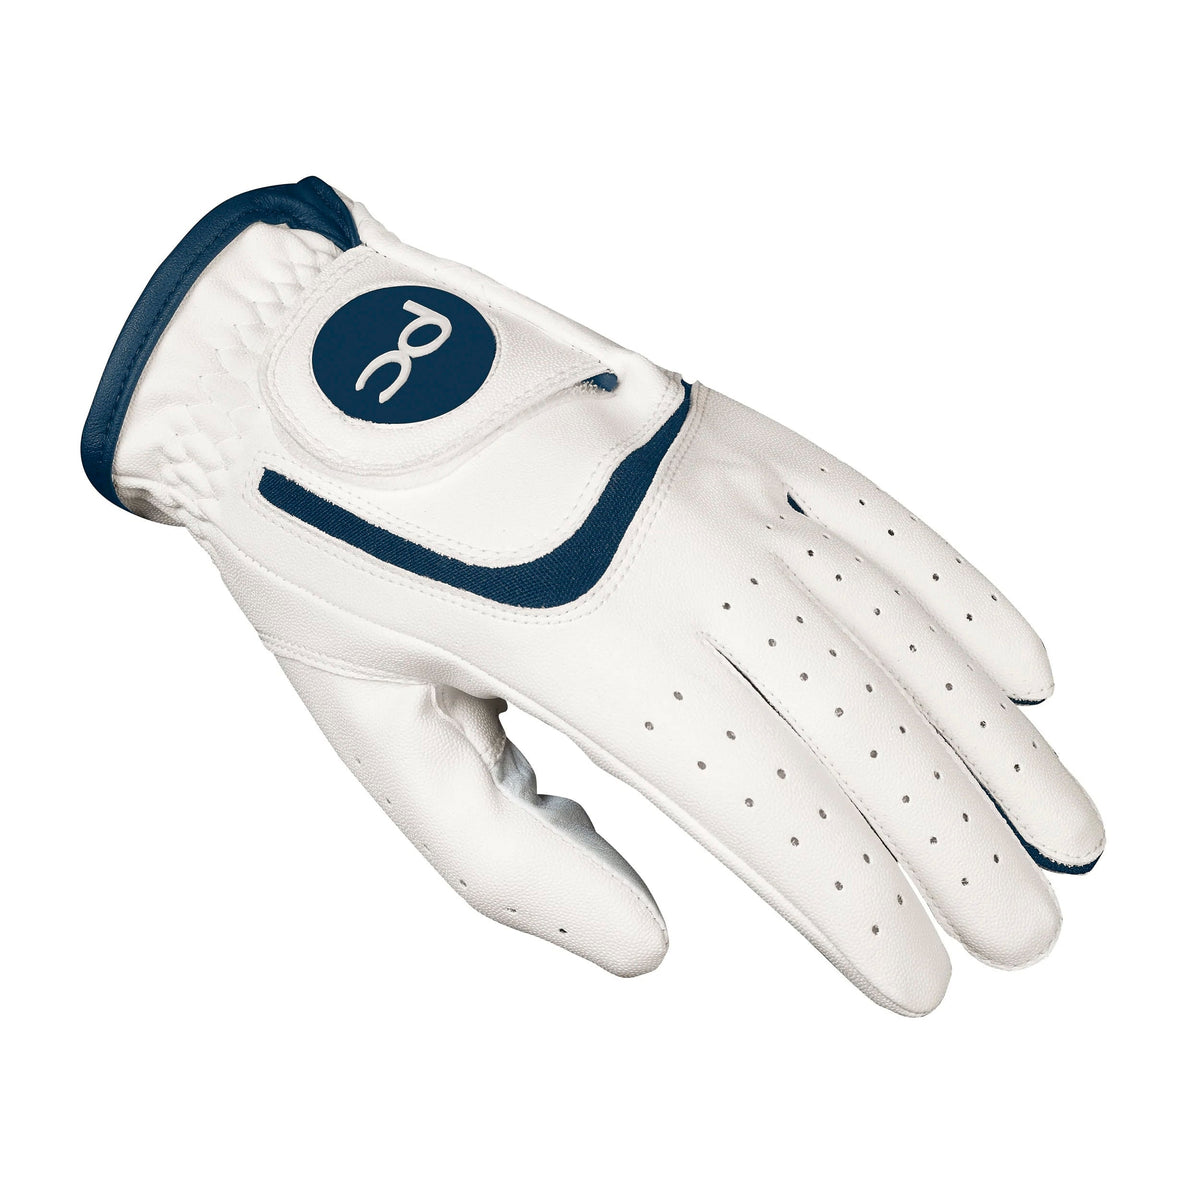 JUNIOR ALL WEATHER GLOVE - RIGHT HAND (Left Handed Golfer) - WHITE/NAVY